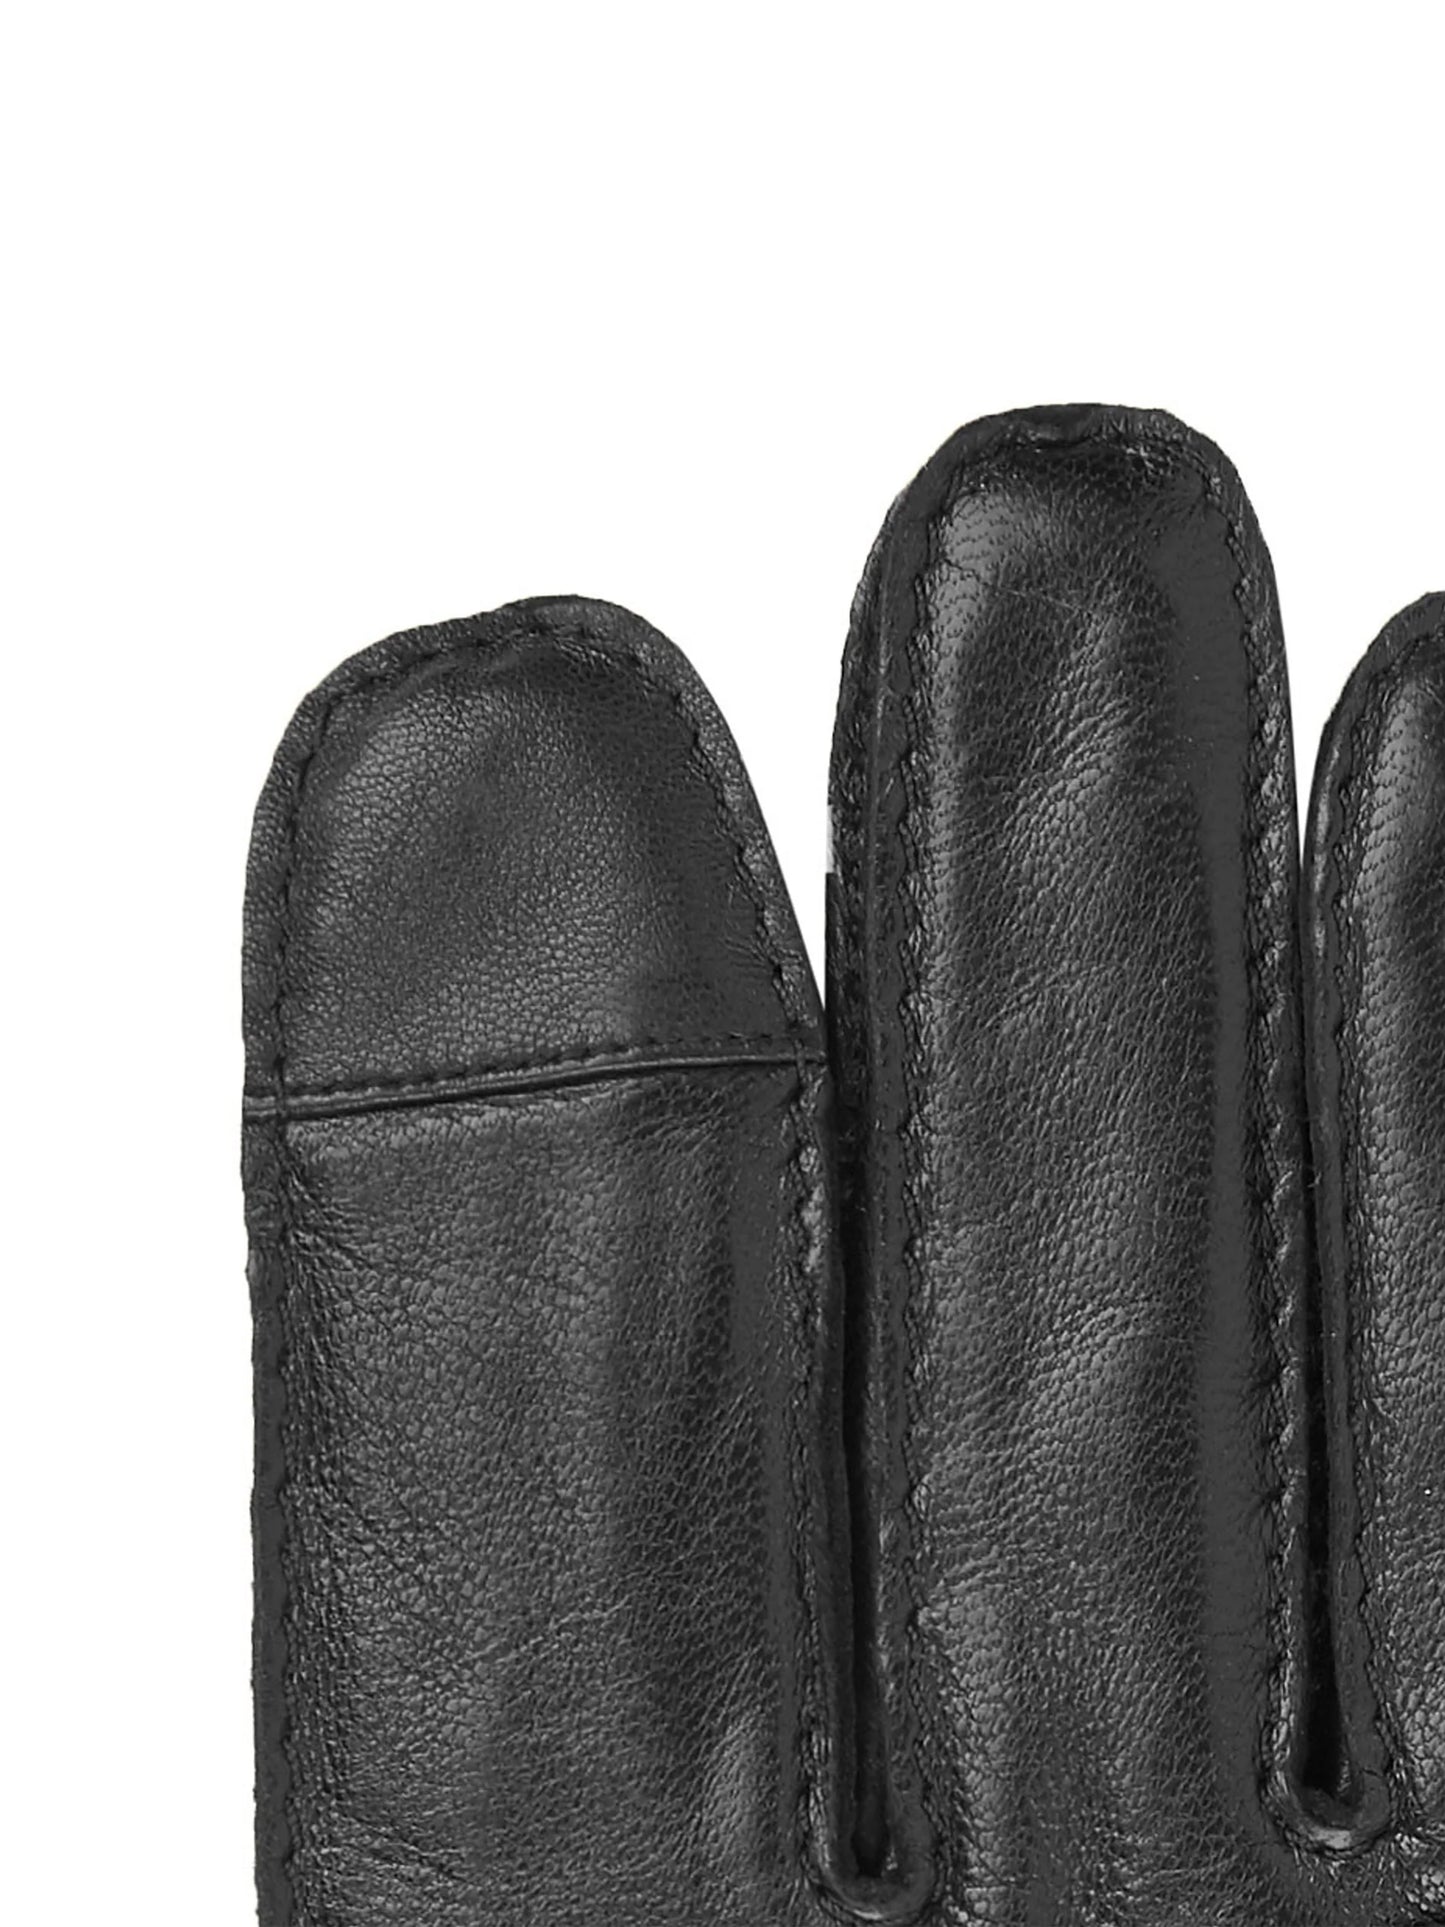 Italian Leather Black Gloves